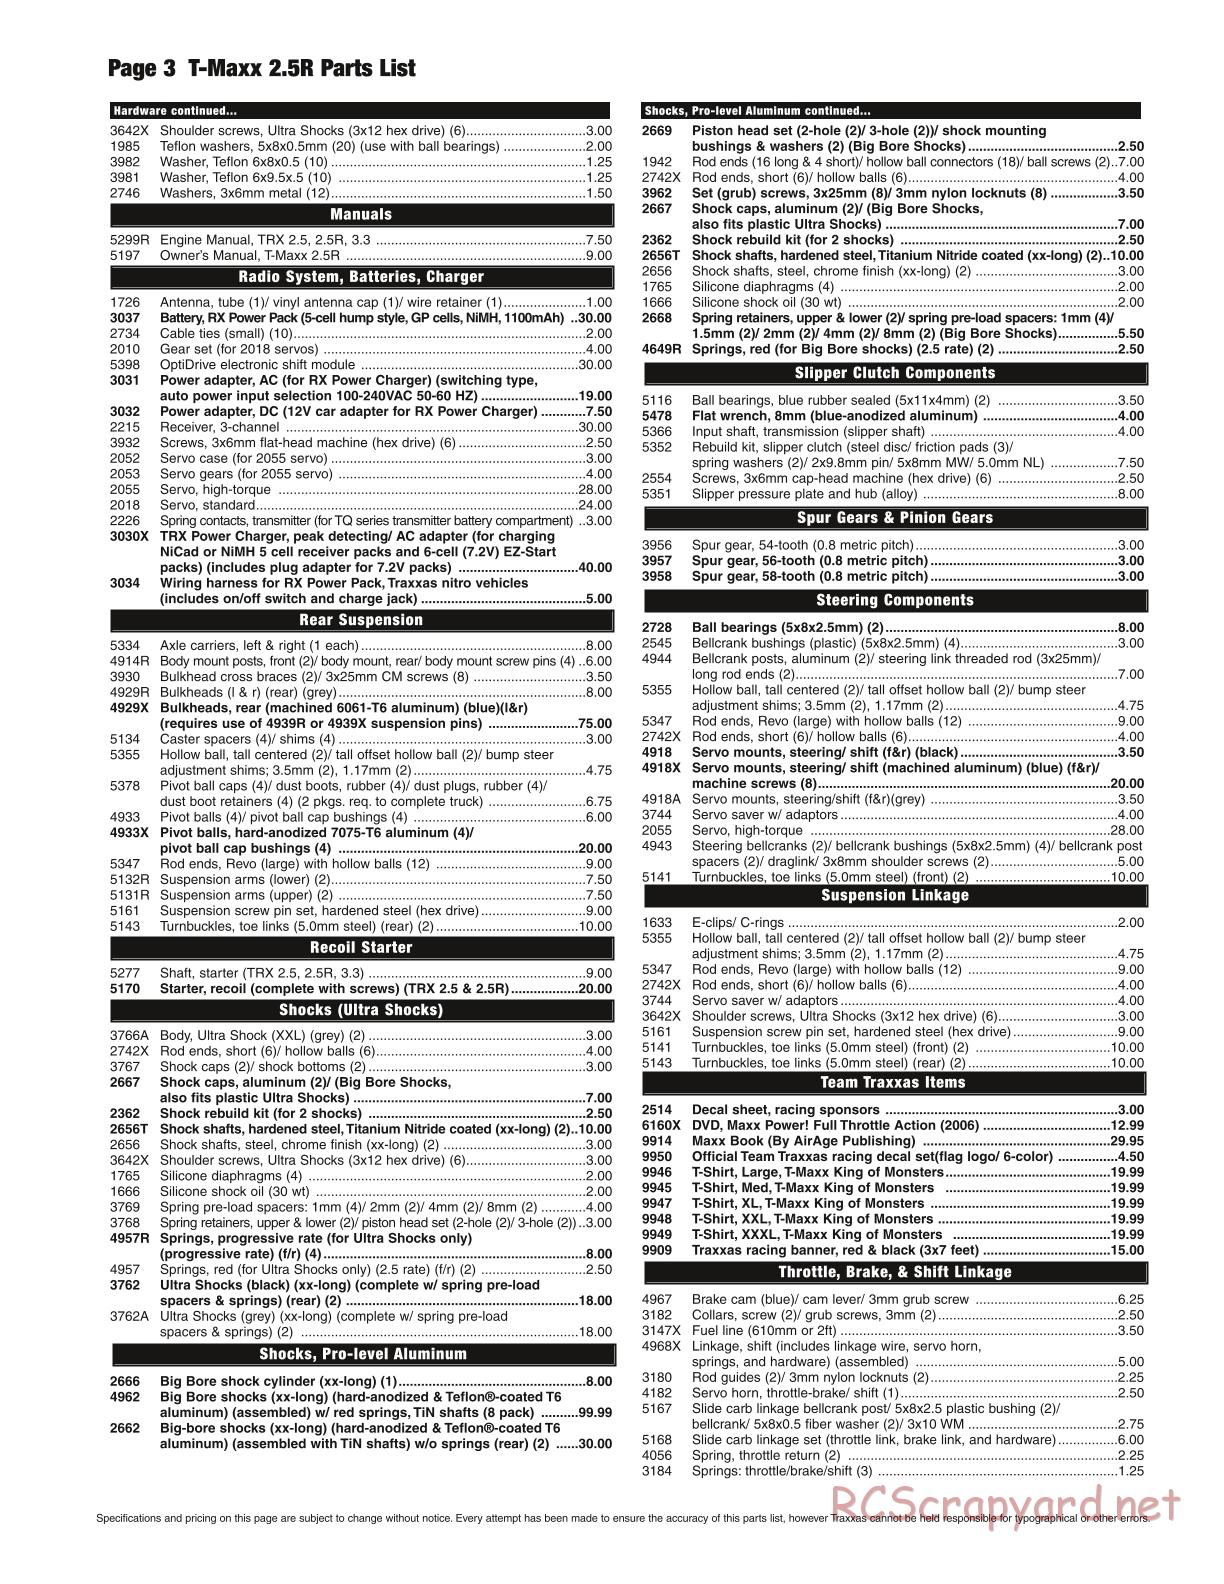 Traxxas - T-Maxx 2.5R (2006) - Parts List - Page 3